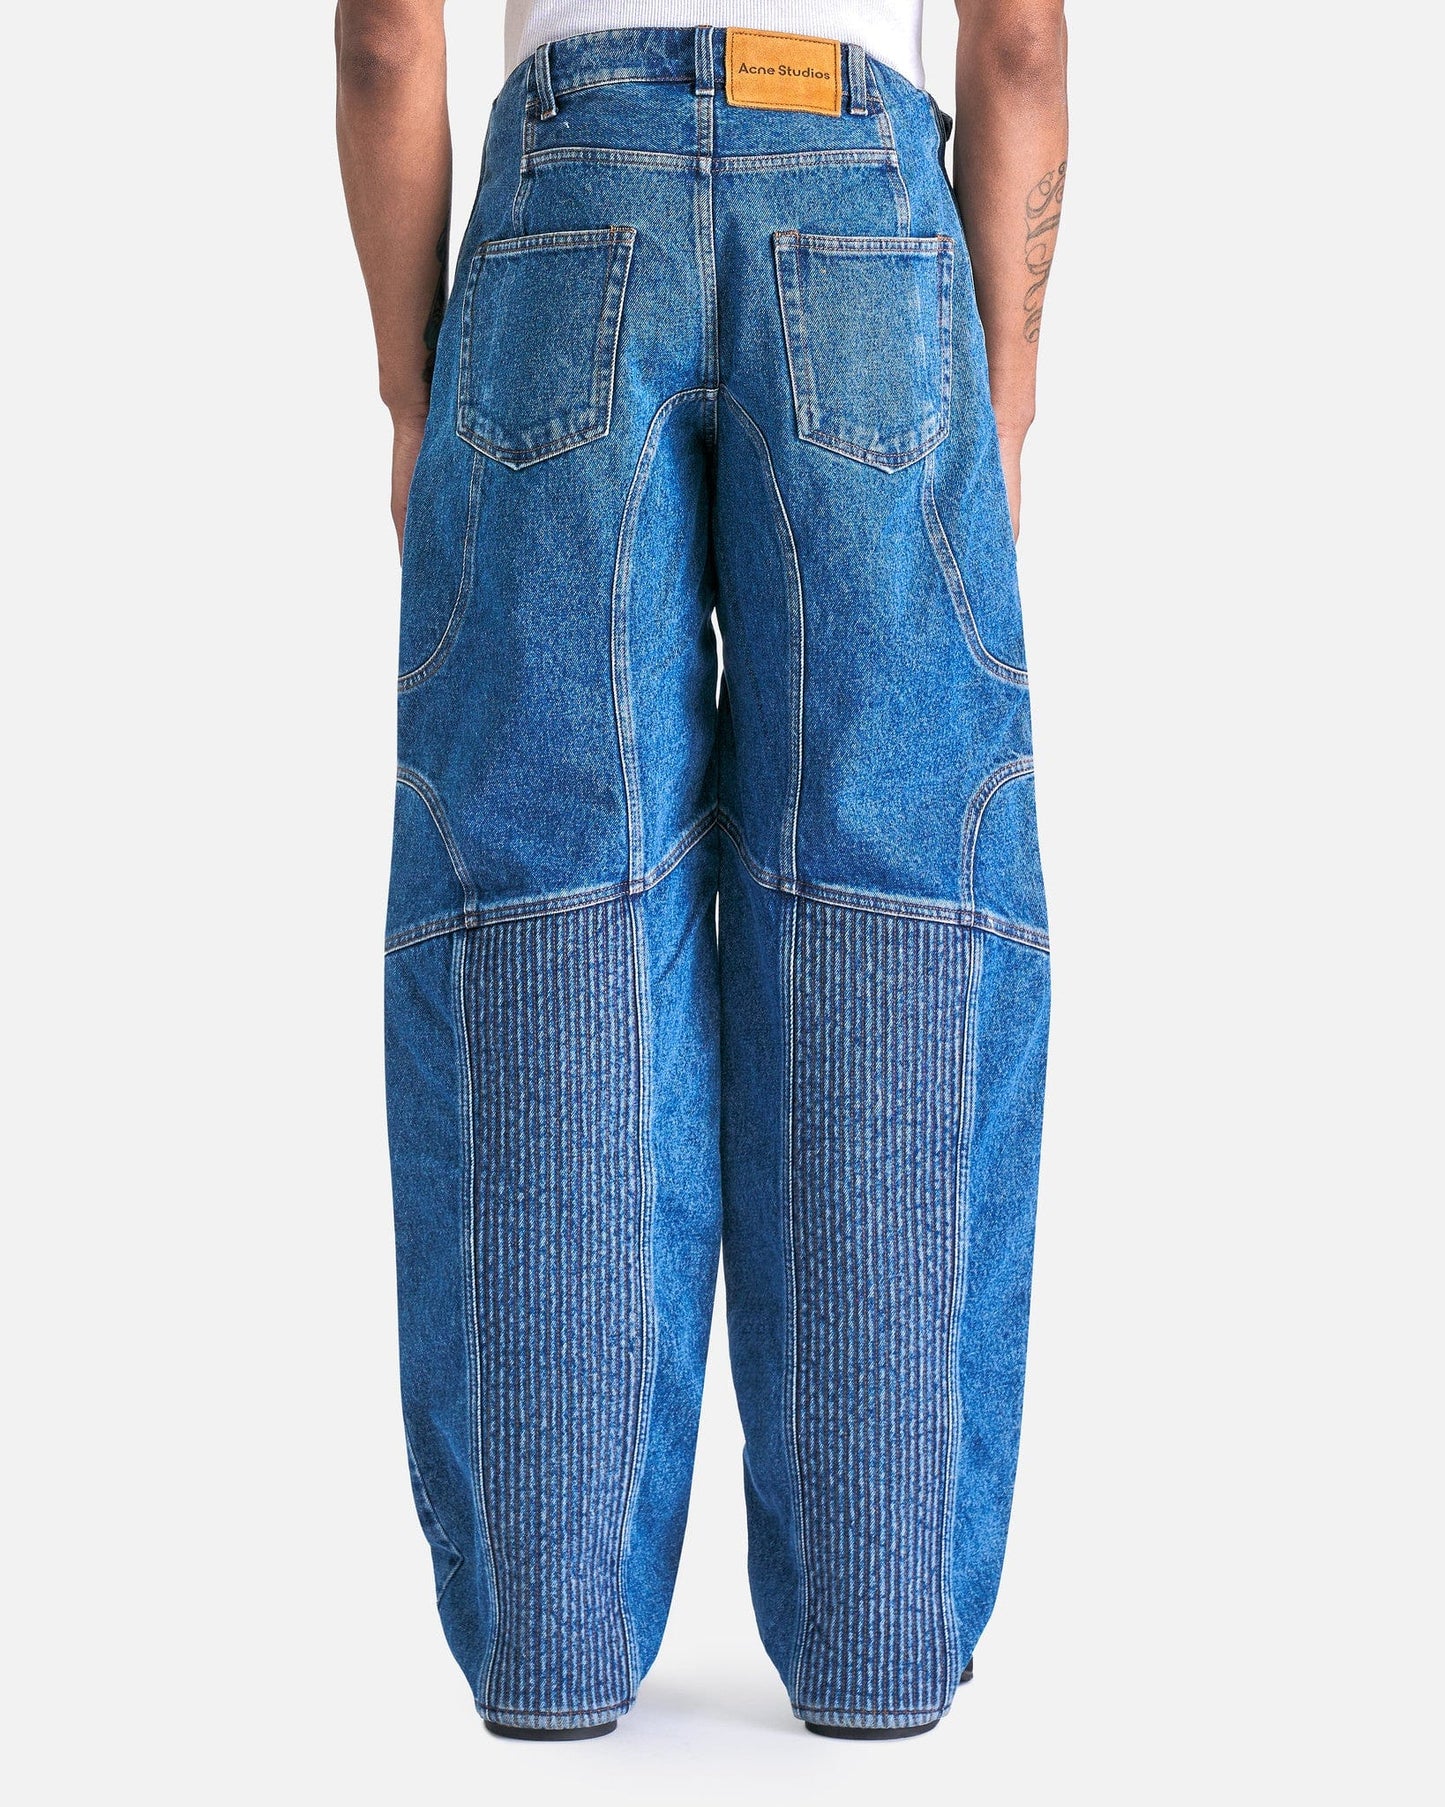 Acne Studios Men's Jeans Denim Paneled Trousers in Mid Blue